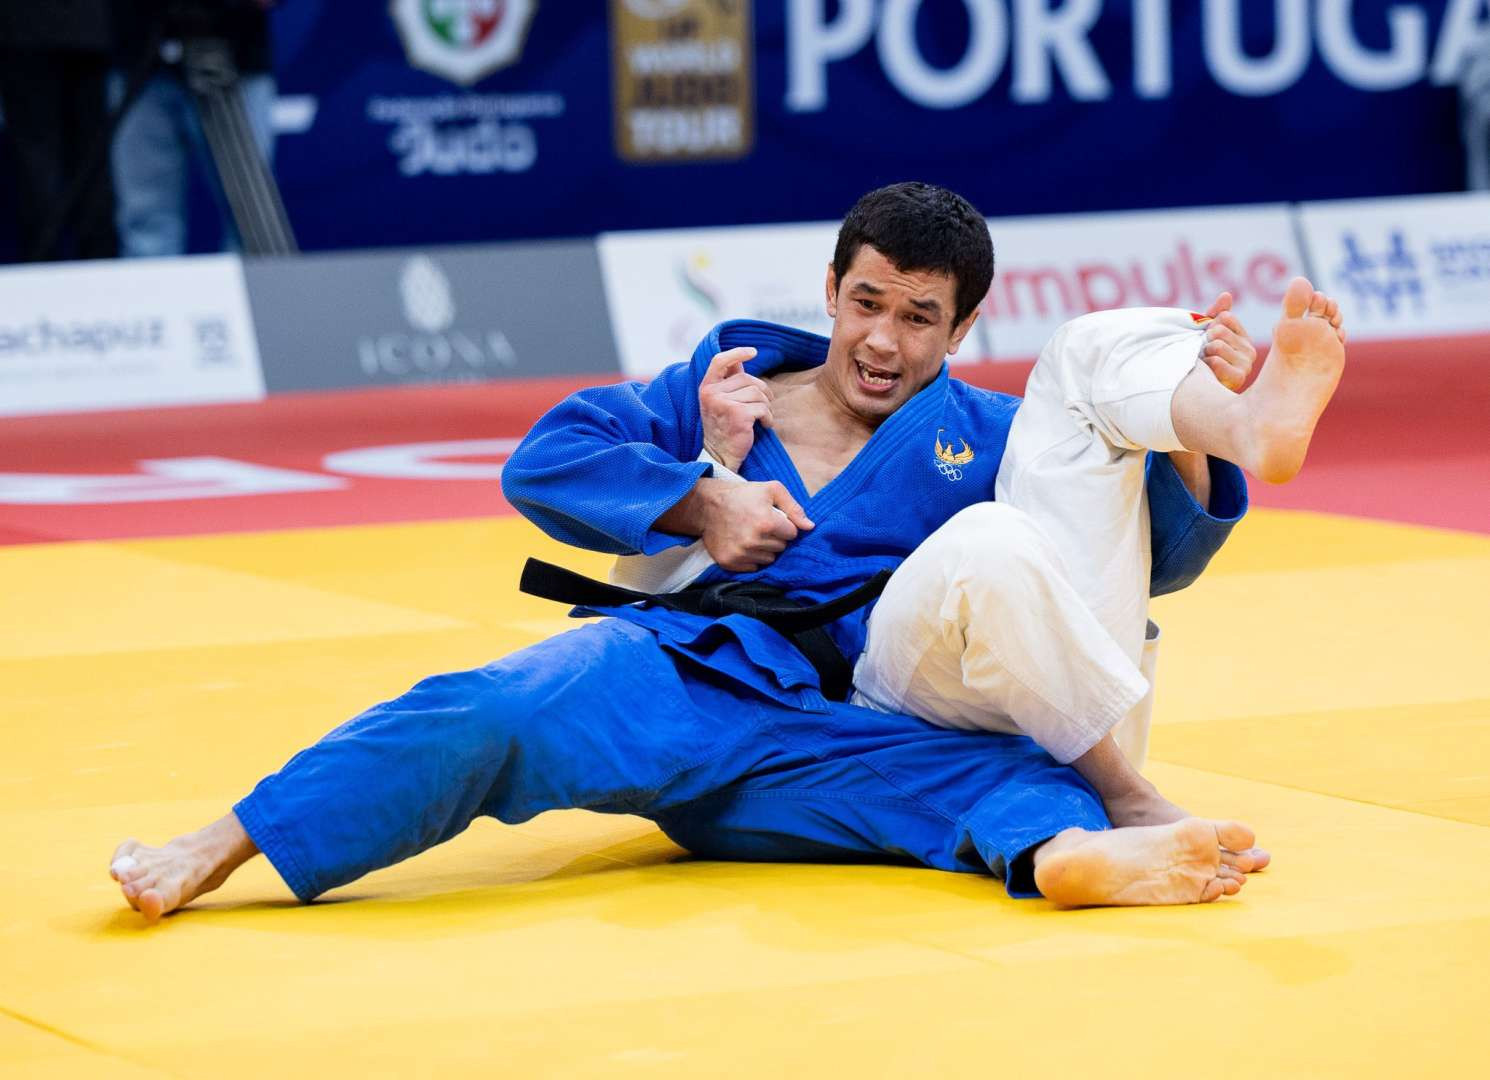 Uzbajistan's Dilshodbek Baratov from Uzbekistan during his final fight at the Grand Prix of Portugal. IJF